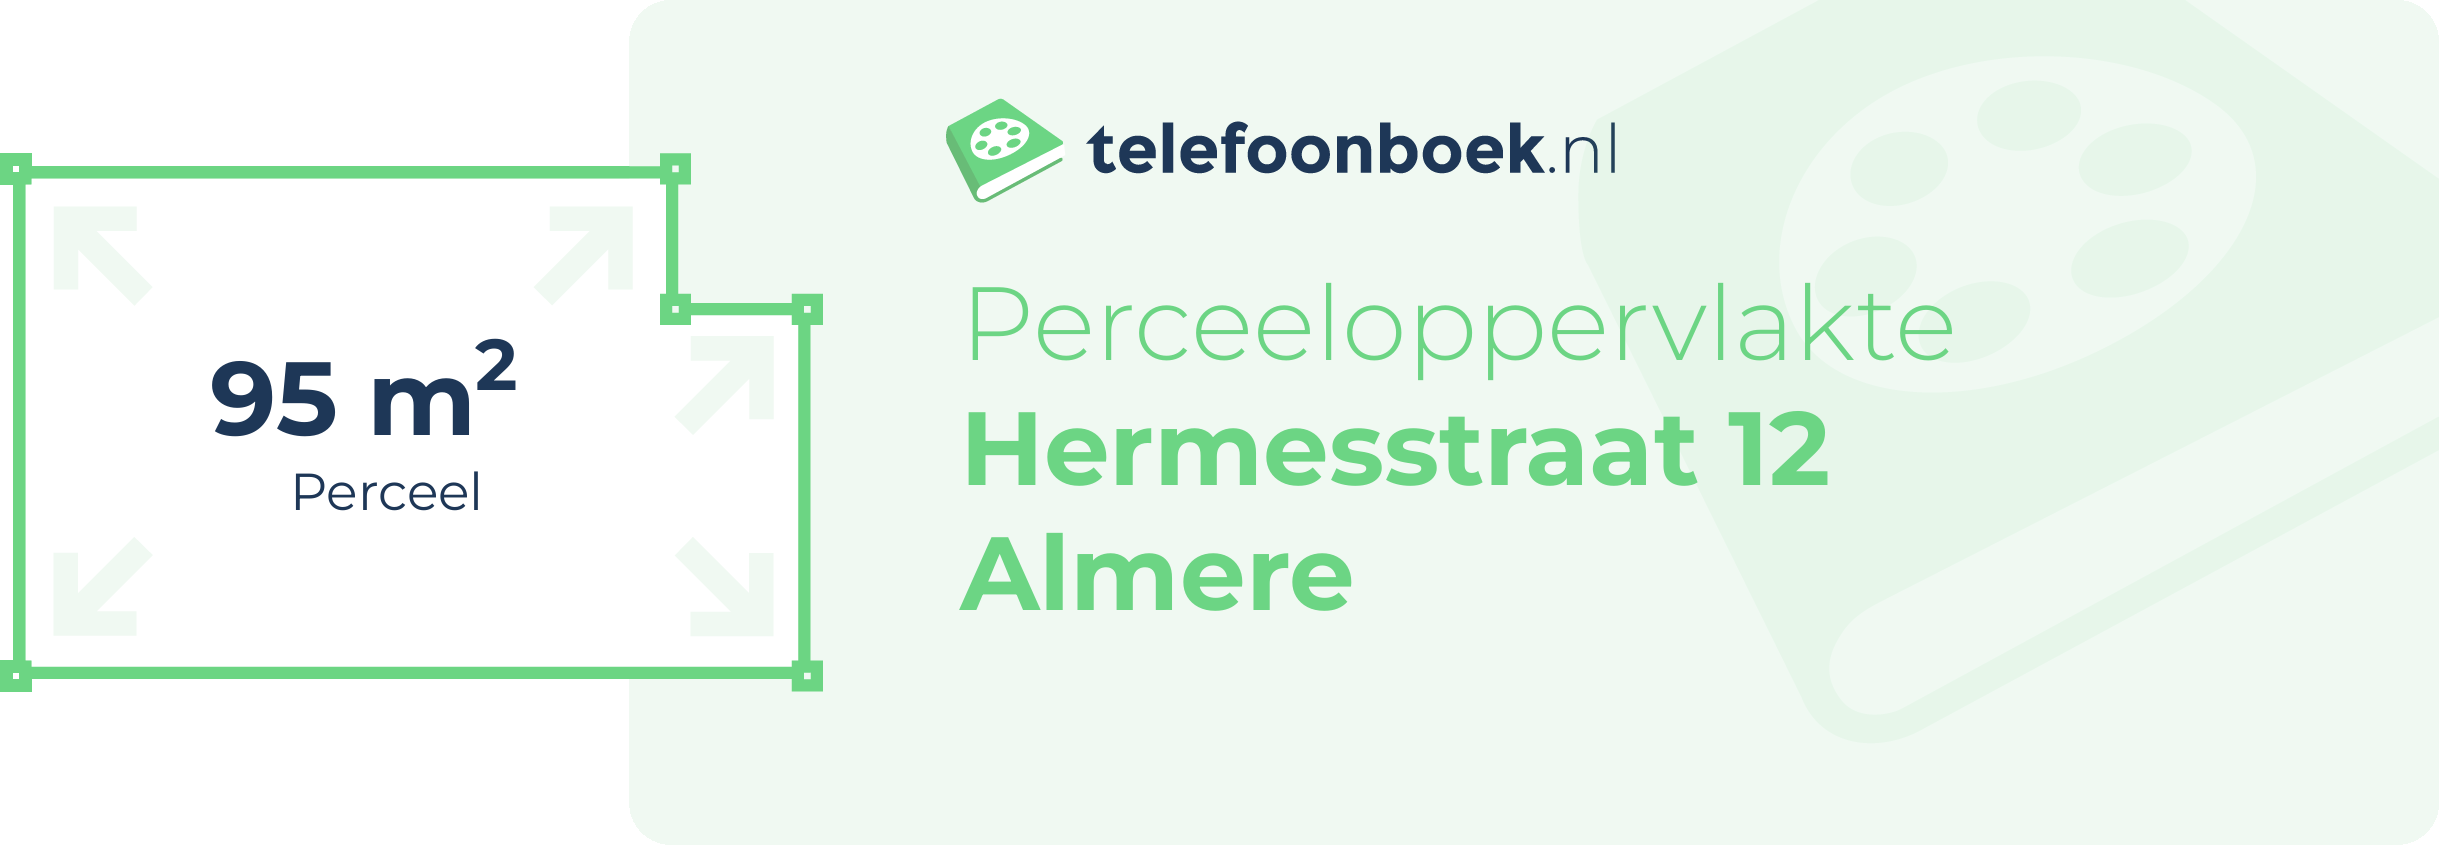 Perceeloppervlakte Hermesstraat 12 Almere